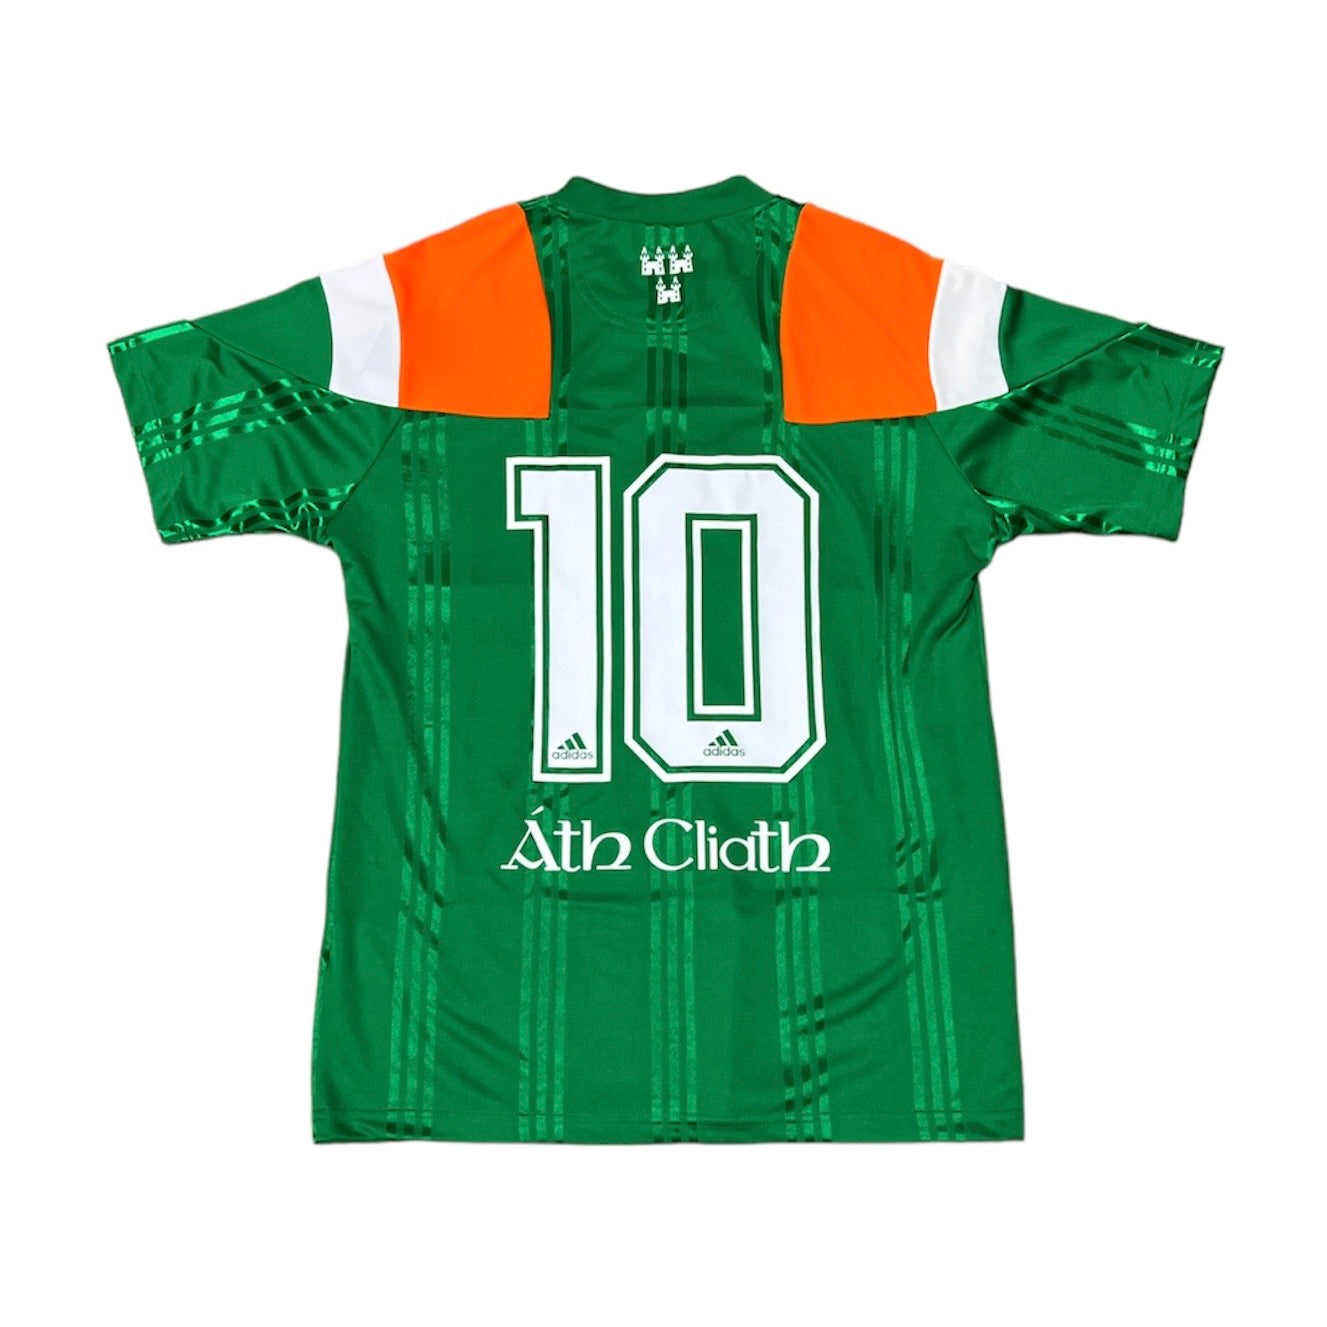 Adidas City Pack Dublin Ireland Football Jersey